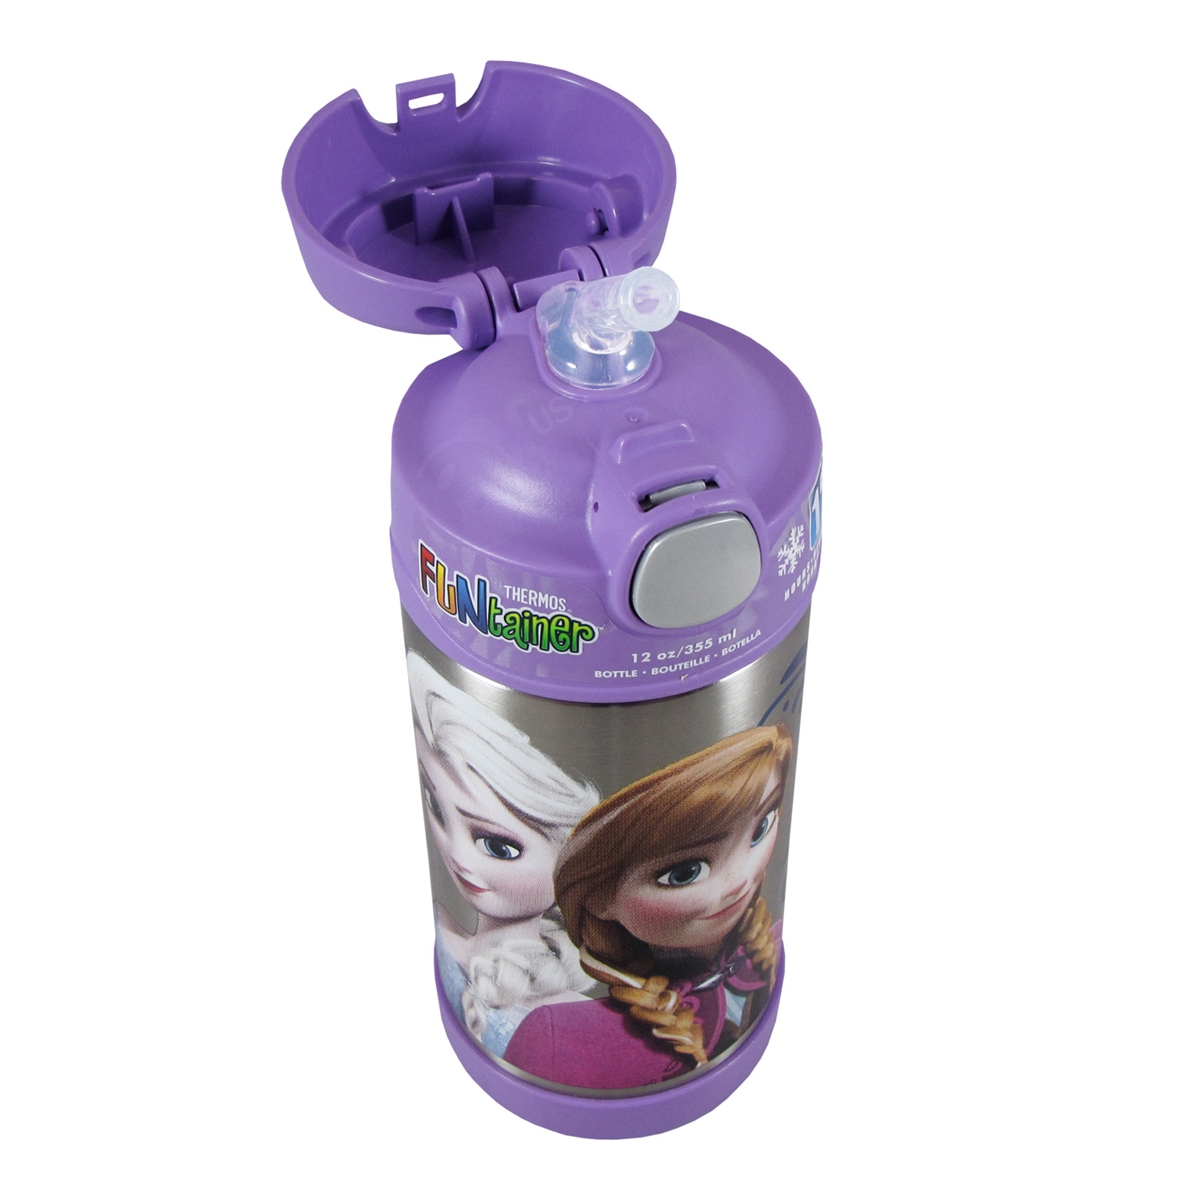 FUNtainer Bottle featuring Disney Frozen Ana & Elsa - 12 oz. (Thermos)